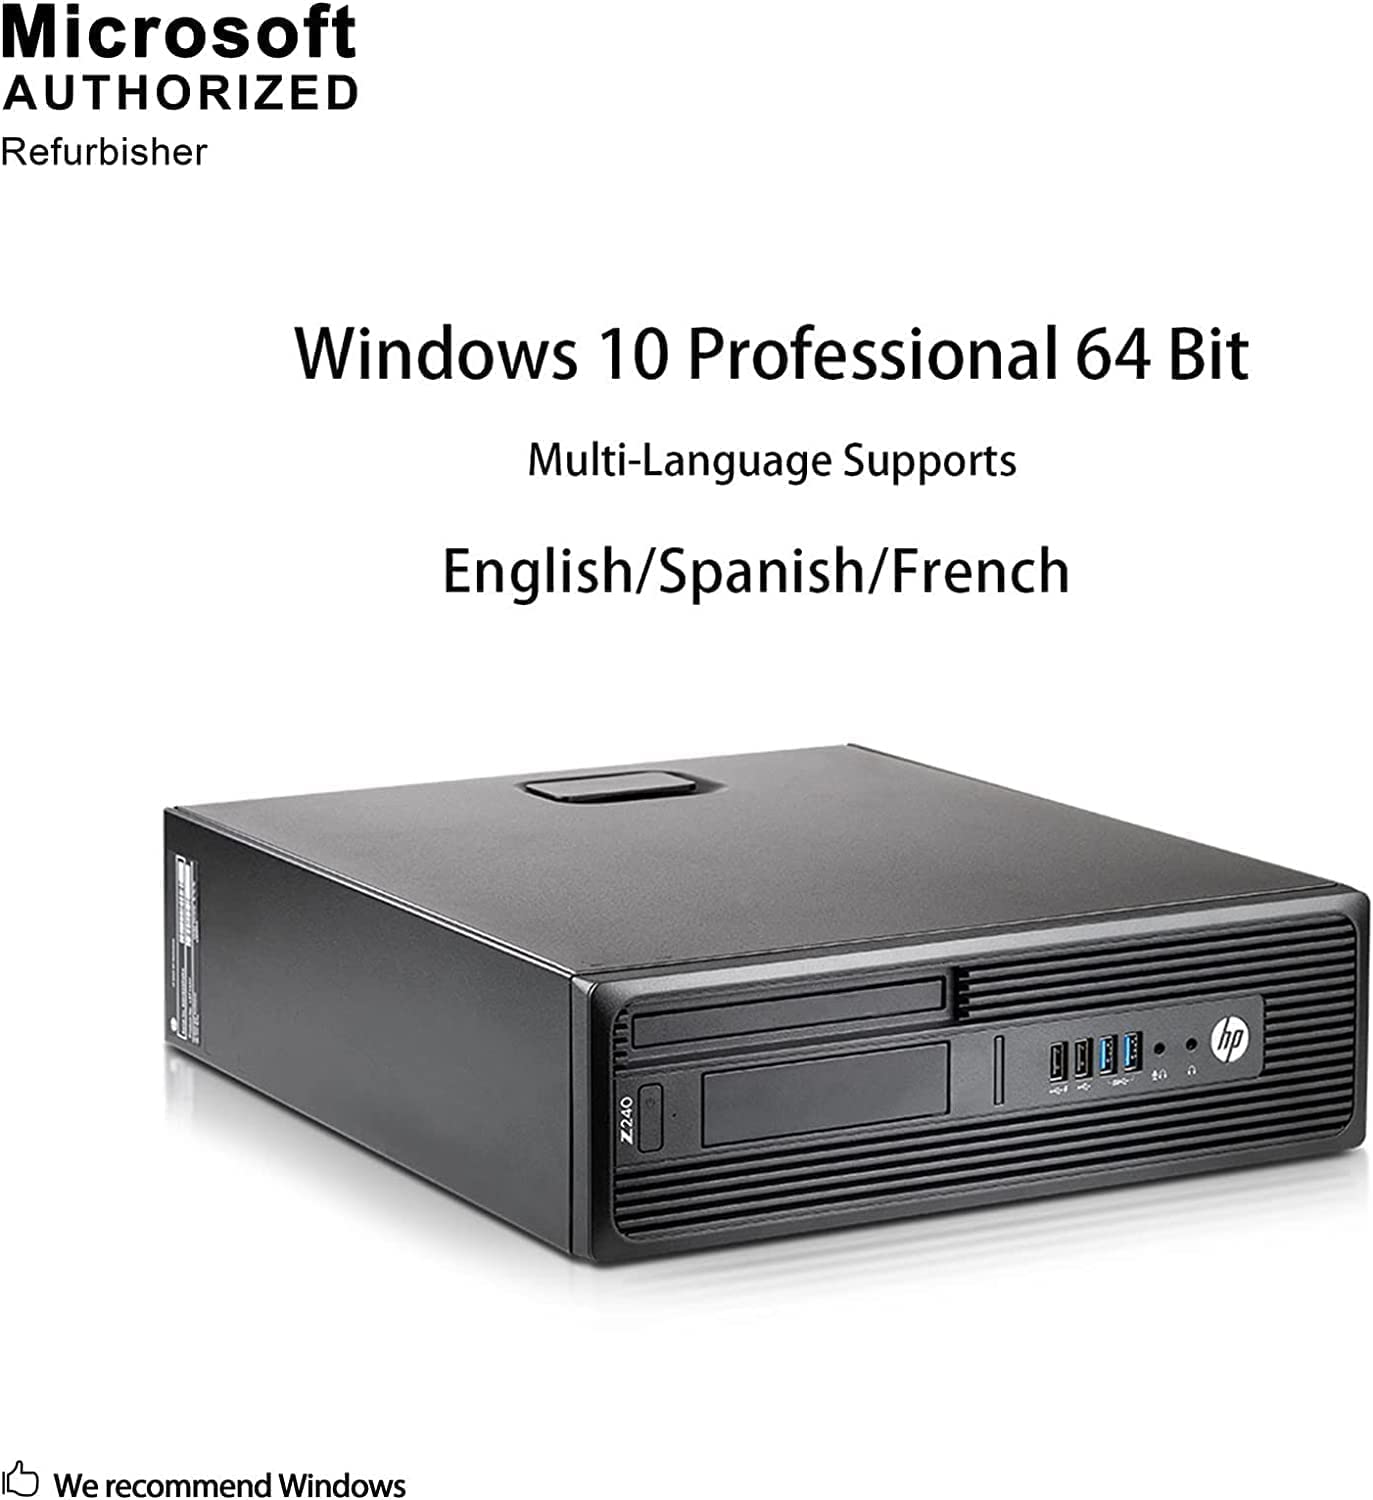 HP Z240 SFF Workstation Desktop Computer, Intel Core i5-7500 up to 3.40GHz Processor, 16GB DDR4 RAM, 1TB SSD, USB 3.0, Wi-Fi & Bluetooth, Windows 10 Pro (Renewed)